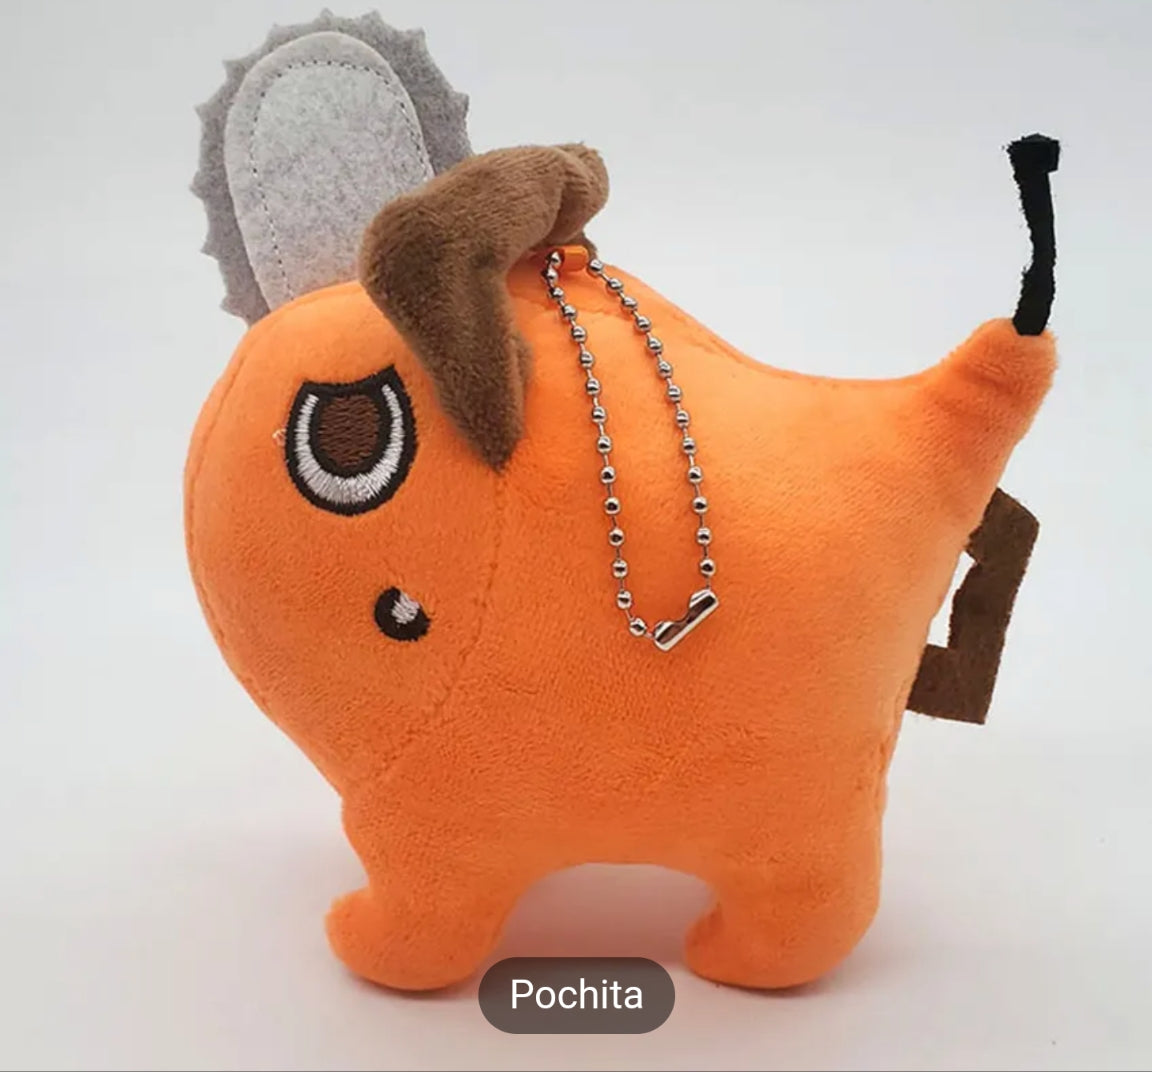 Chainsaw Man Pochita Plush Toy